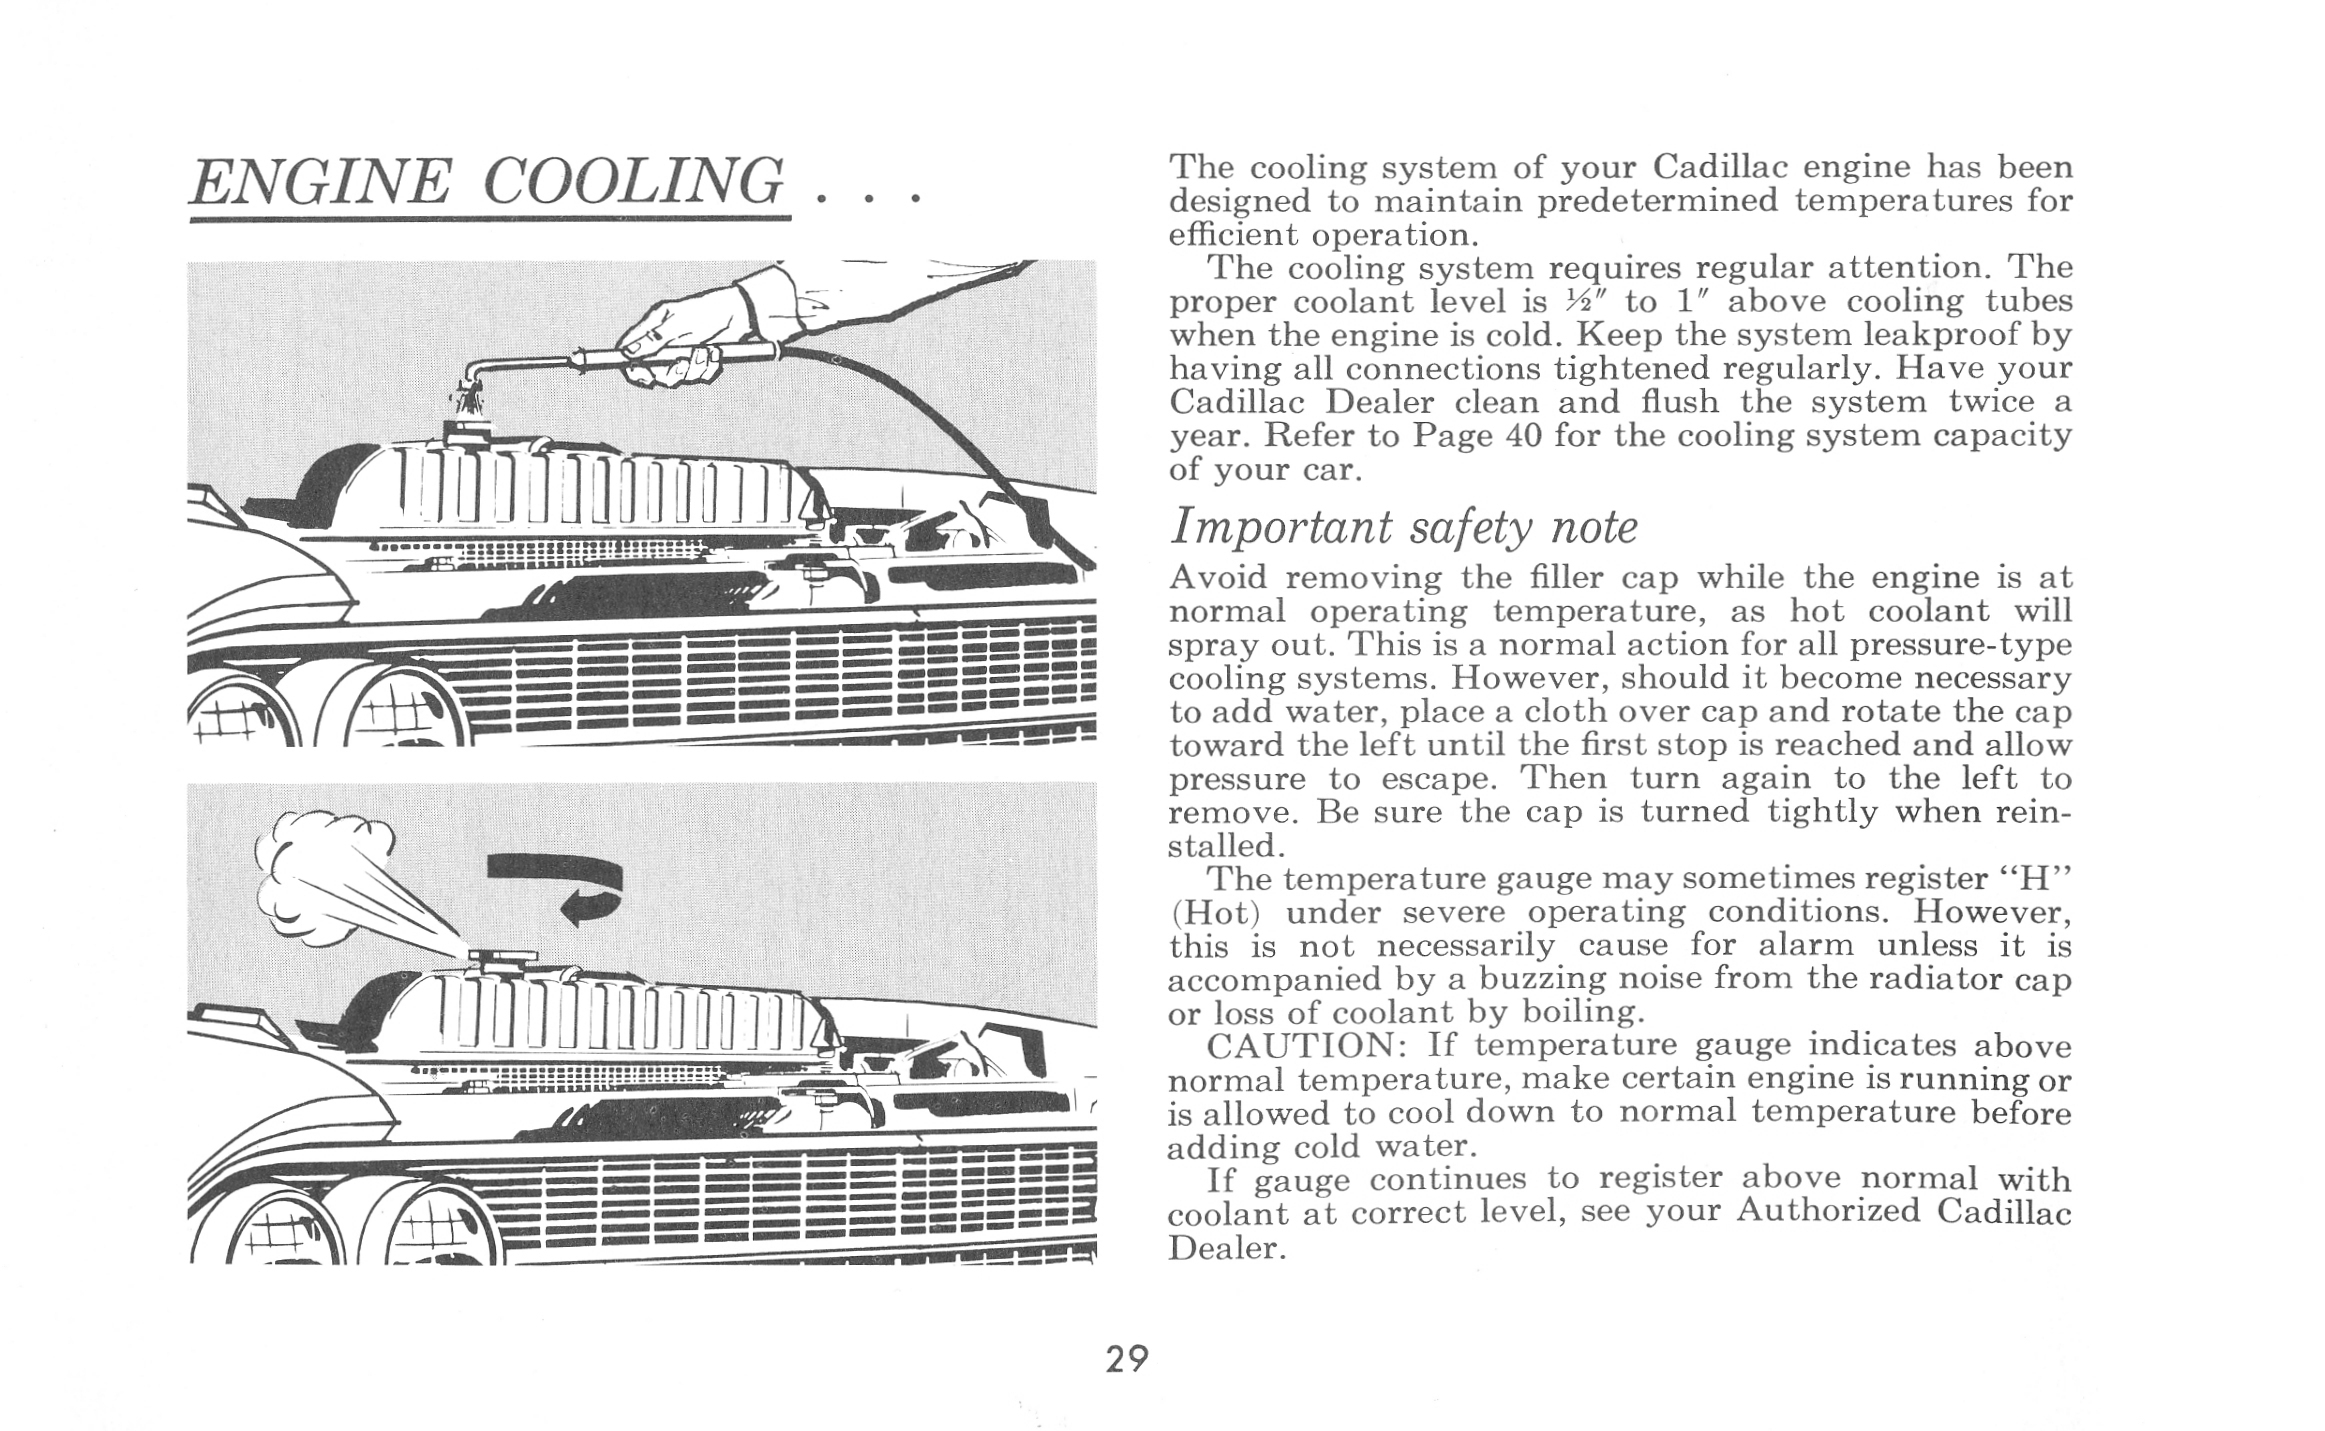 n_1962 Cadillac Owner's Manual-Page 29.jpg